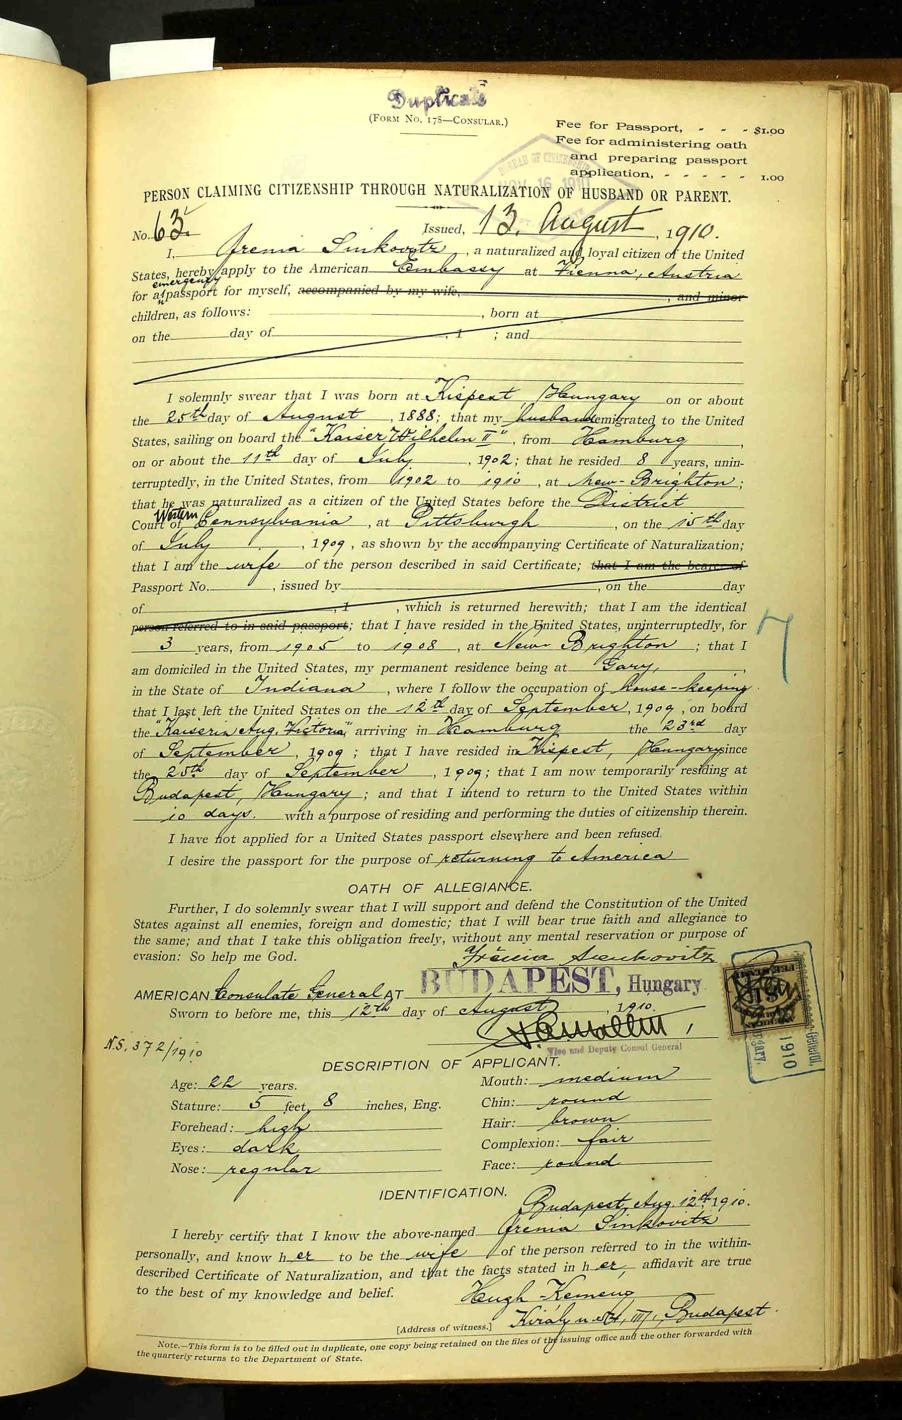 Irene Sinkovitz's Citizenship Claim